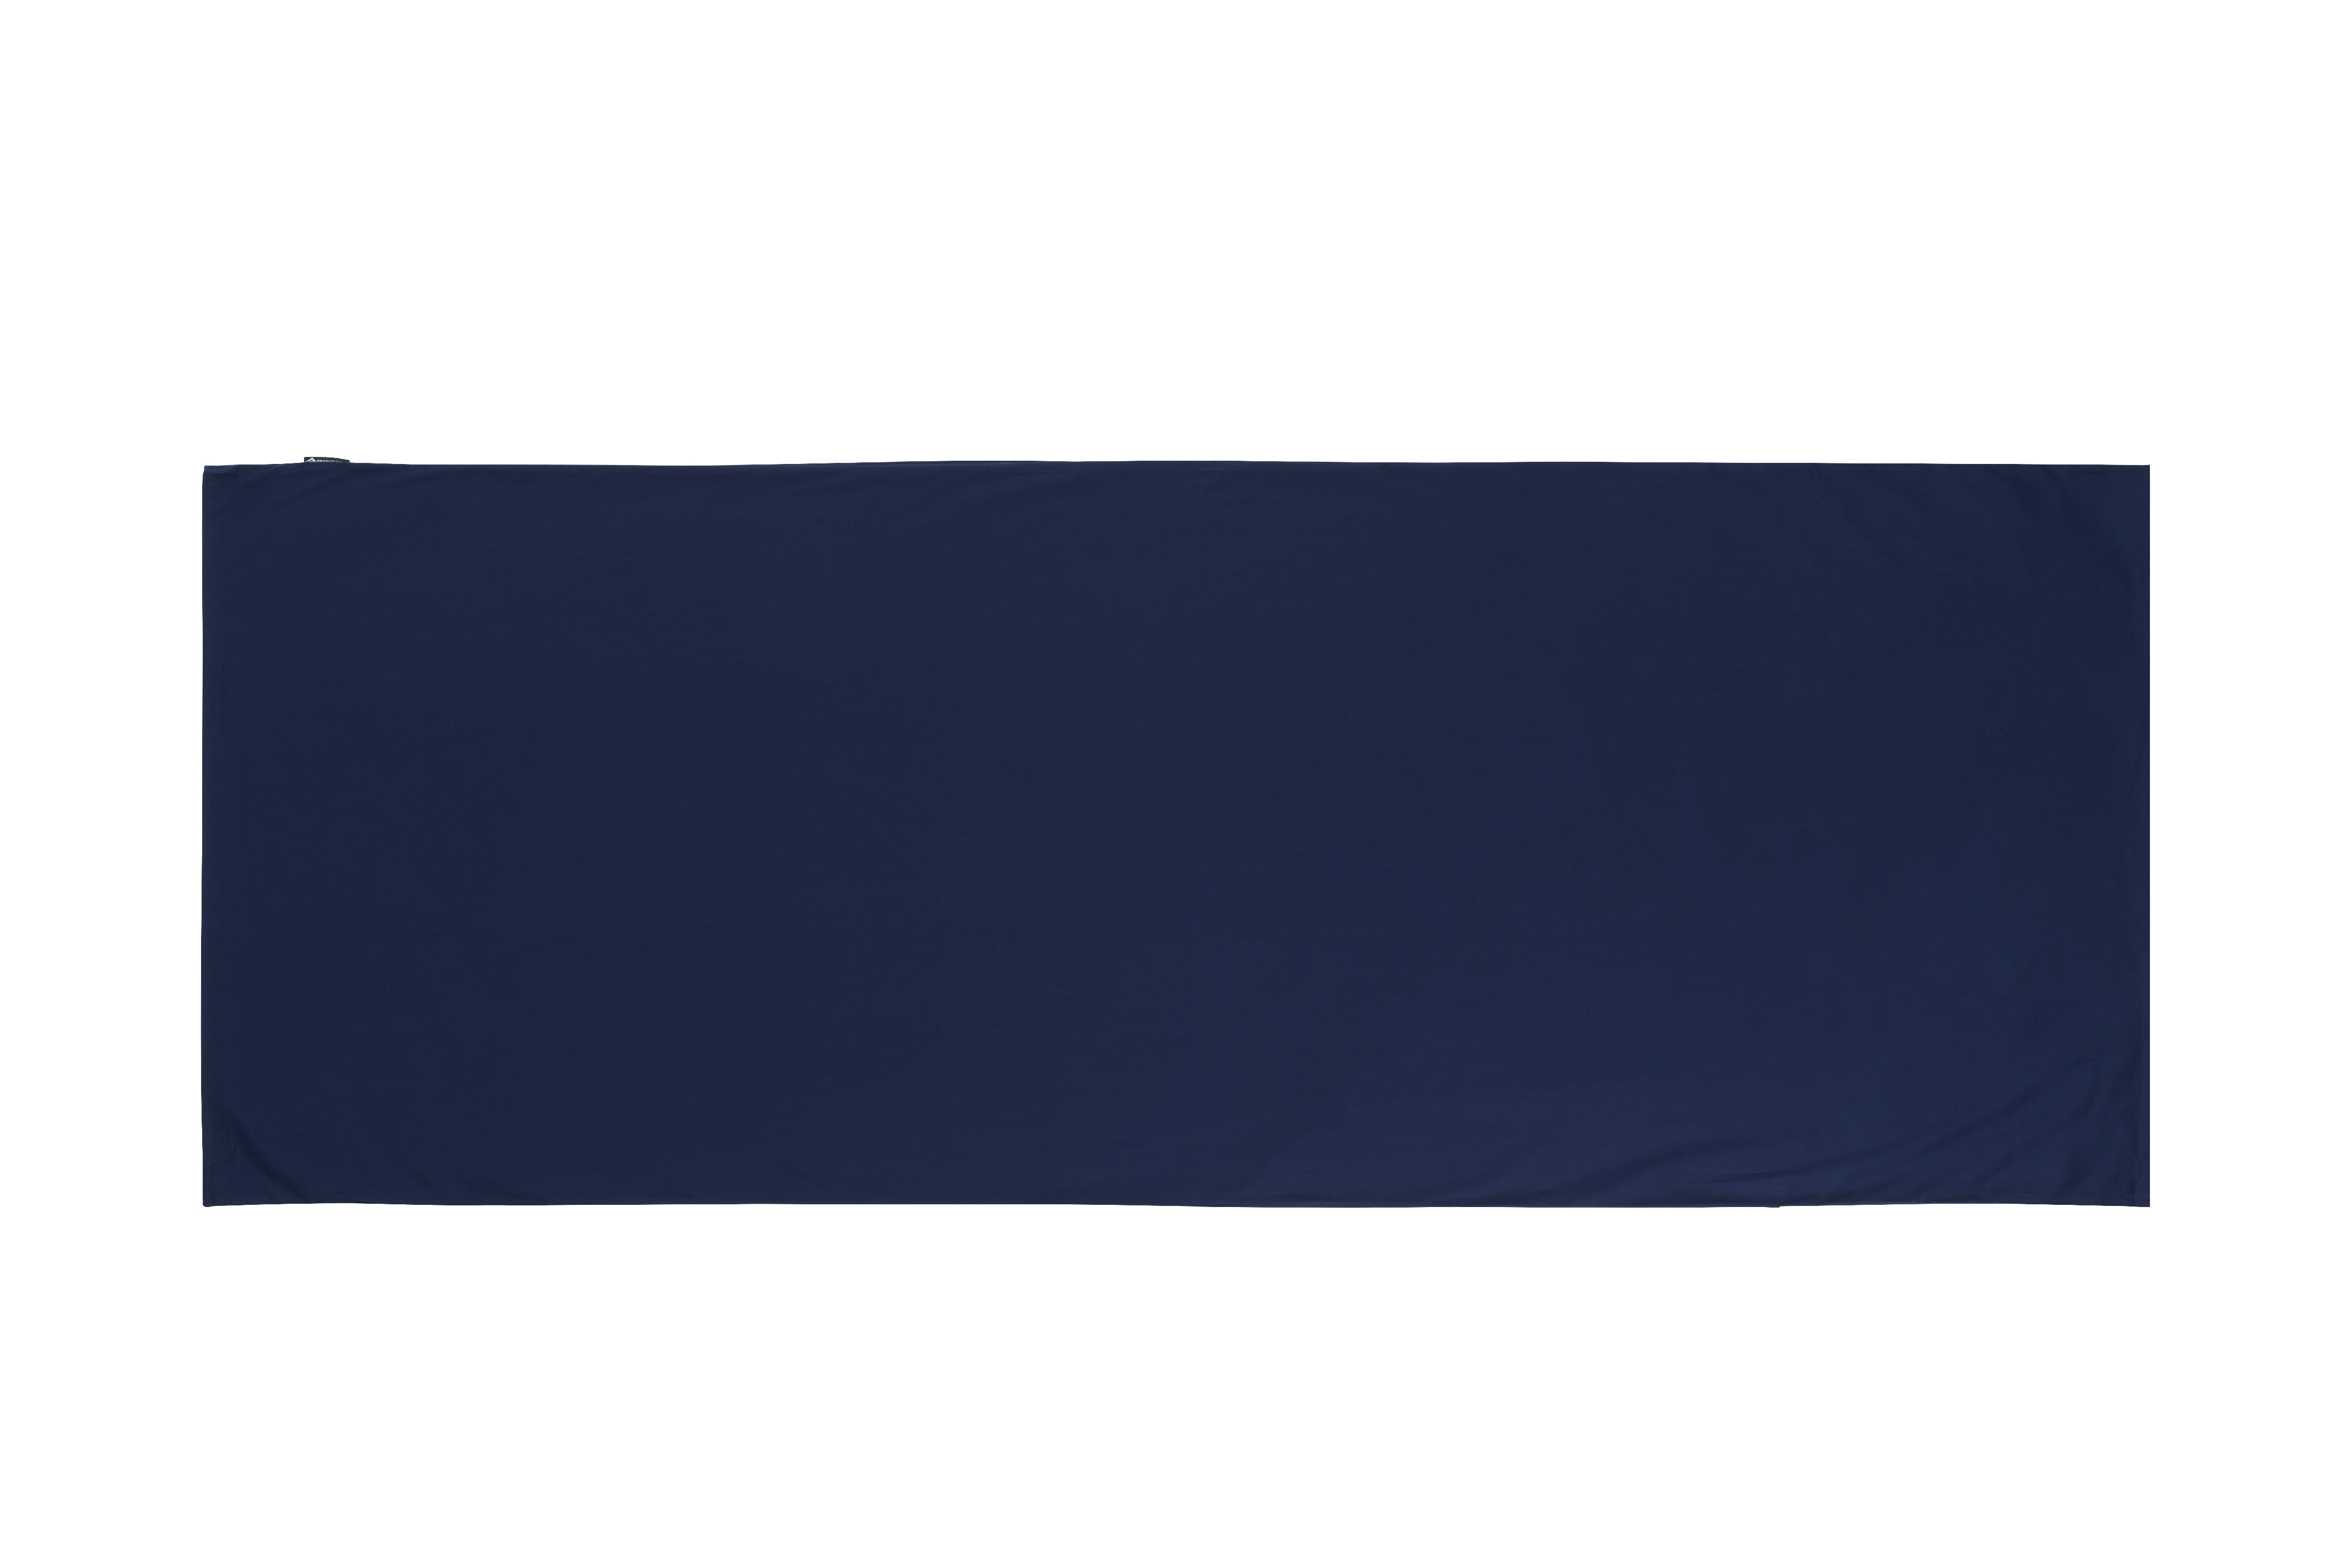 Vložka do spacáku Sea to Summit Premium Cotton Travel Liner velikost: Standard (Rectangular), barva: modrá